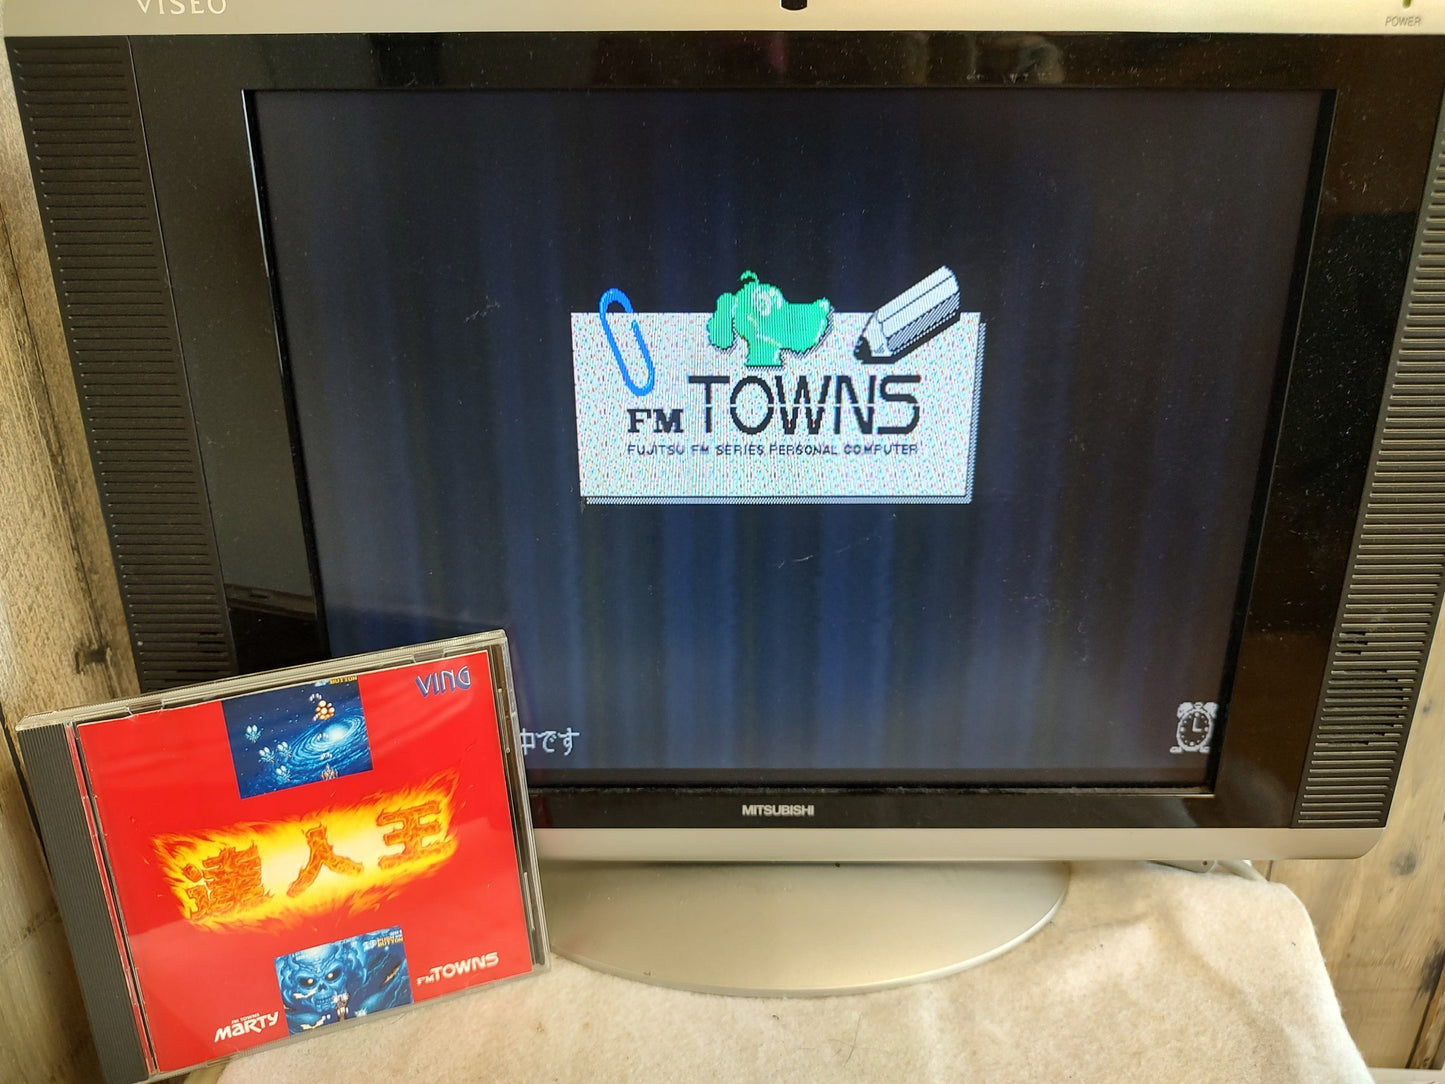 TATSUJIN OH (TATSUJIN 2) Fujitsu FM TOWNS Shooting Game Disk set, Working-f1117-